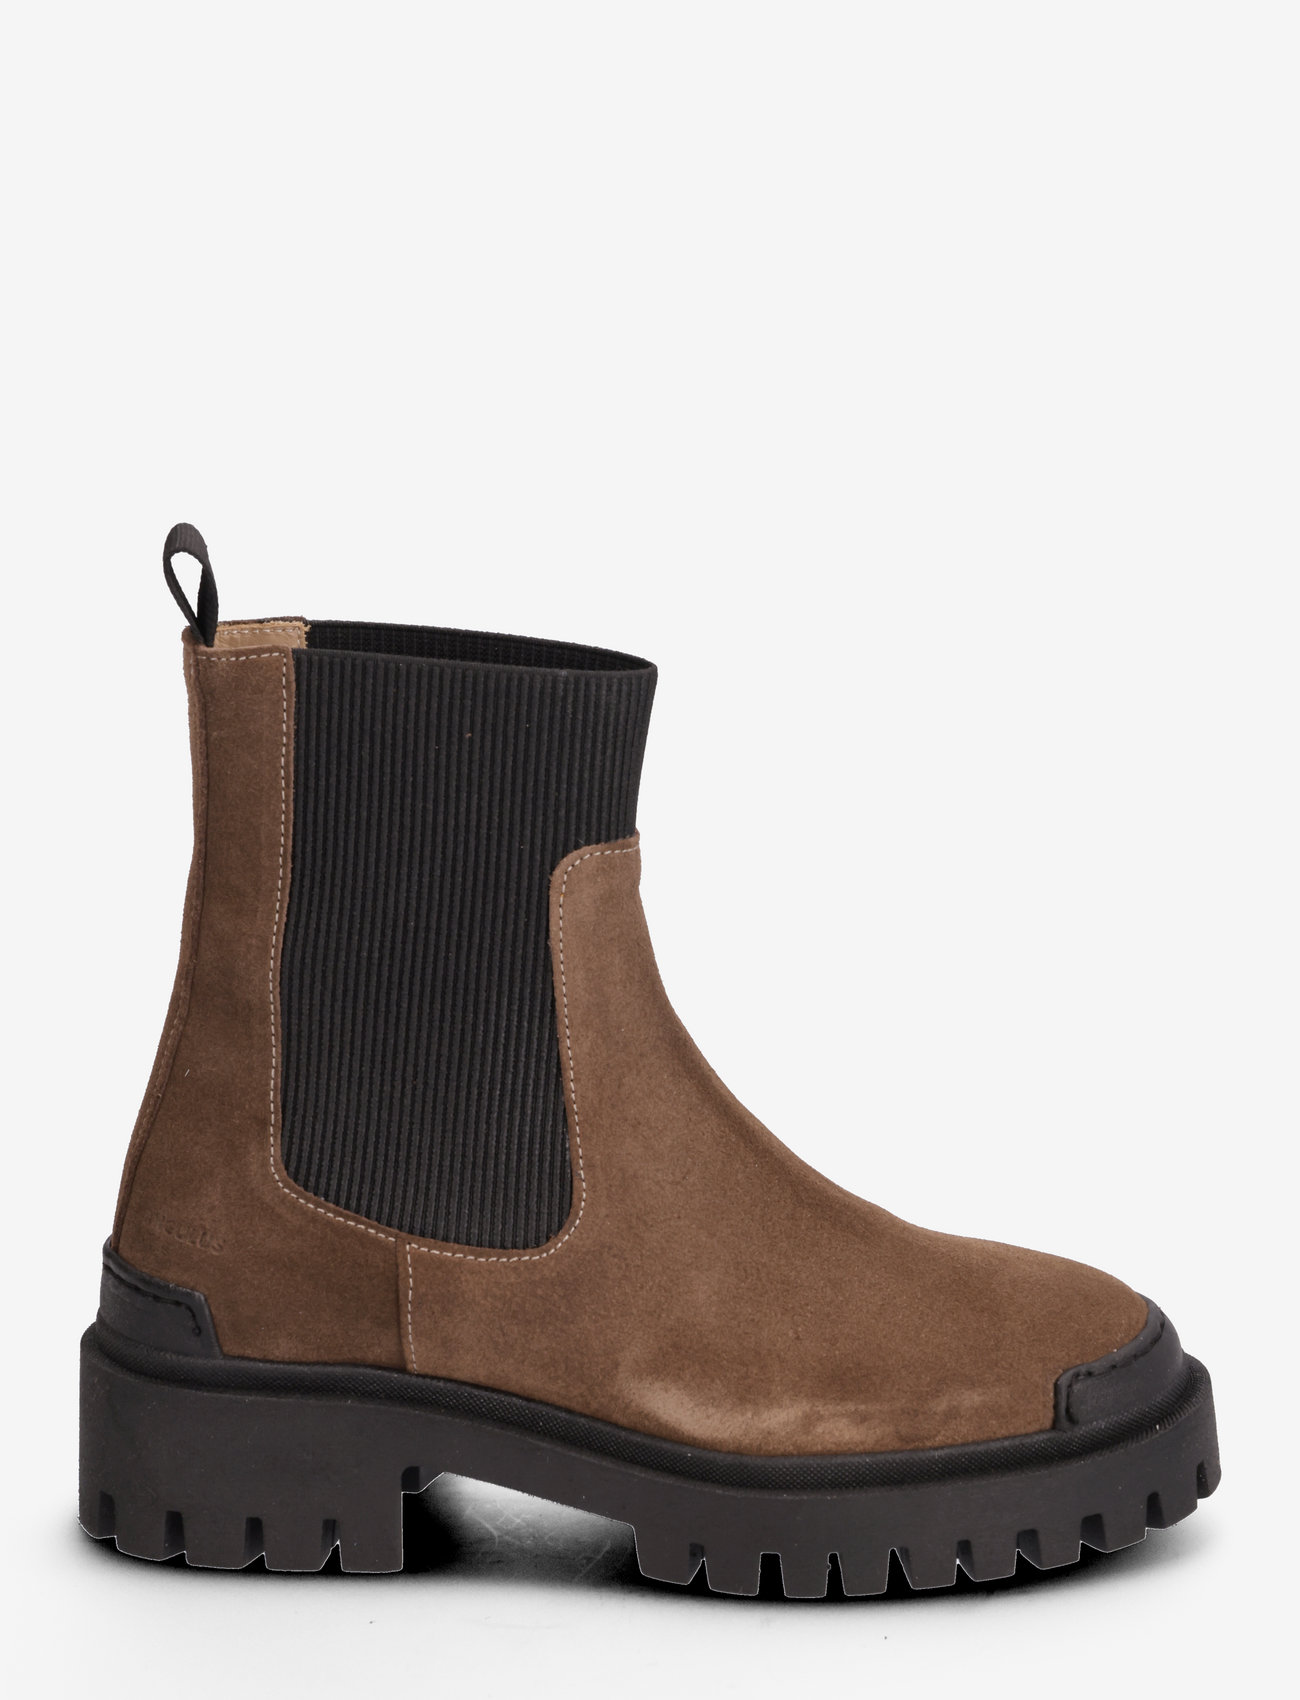 ANGULUS - Boots - flat - chelsea stila zābaki - 1753/019 taupe/black - 1